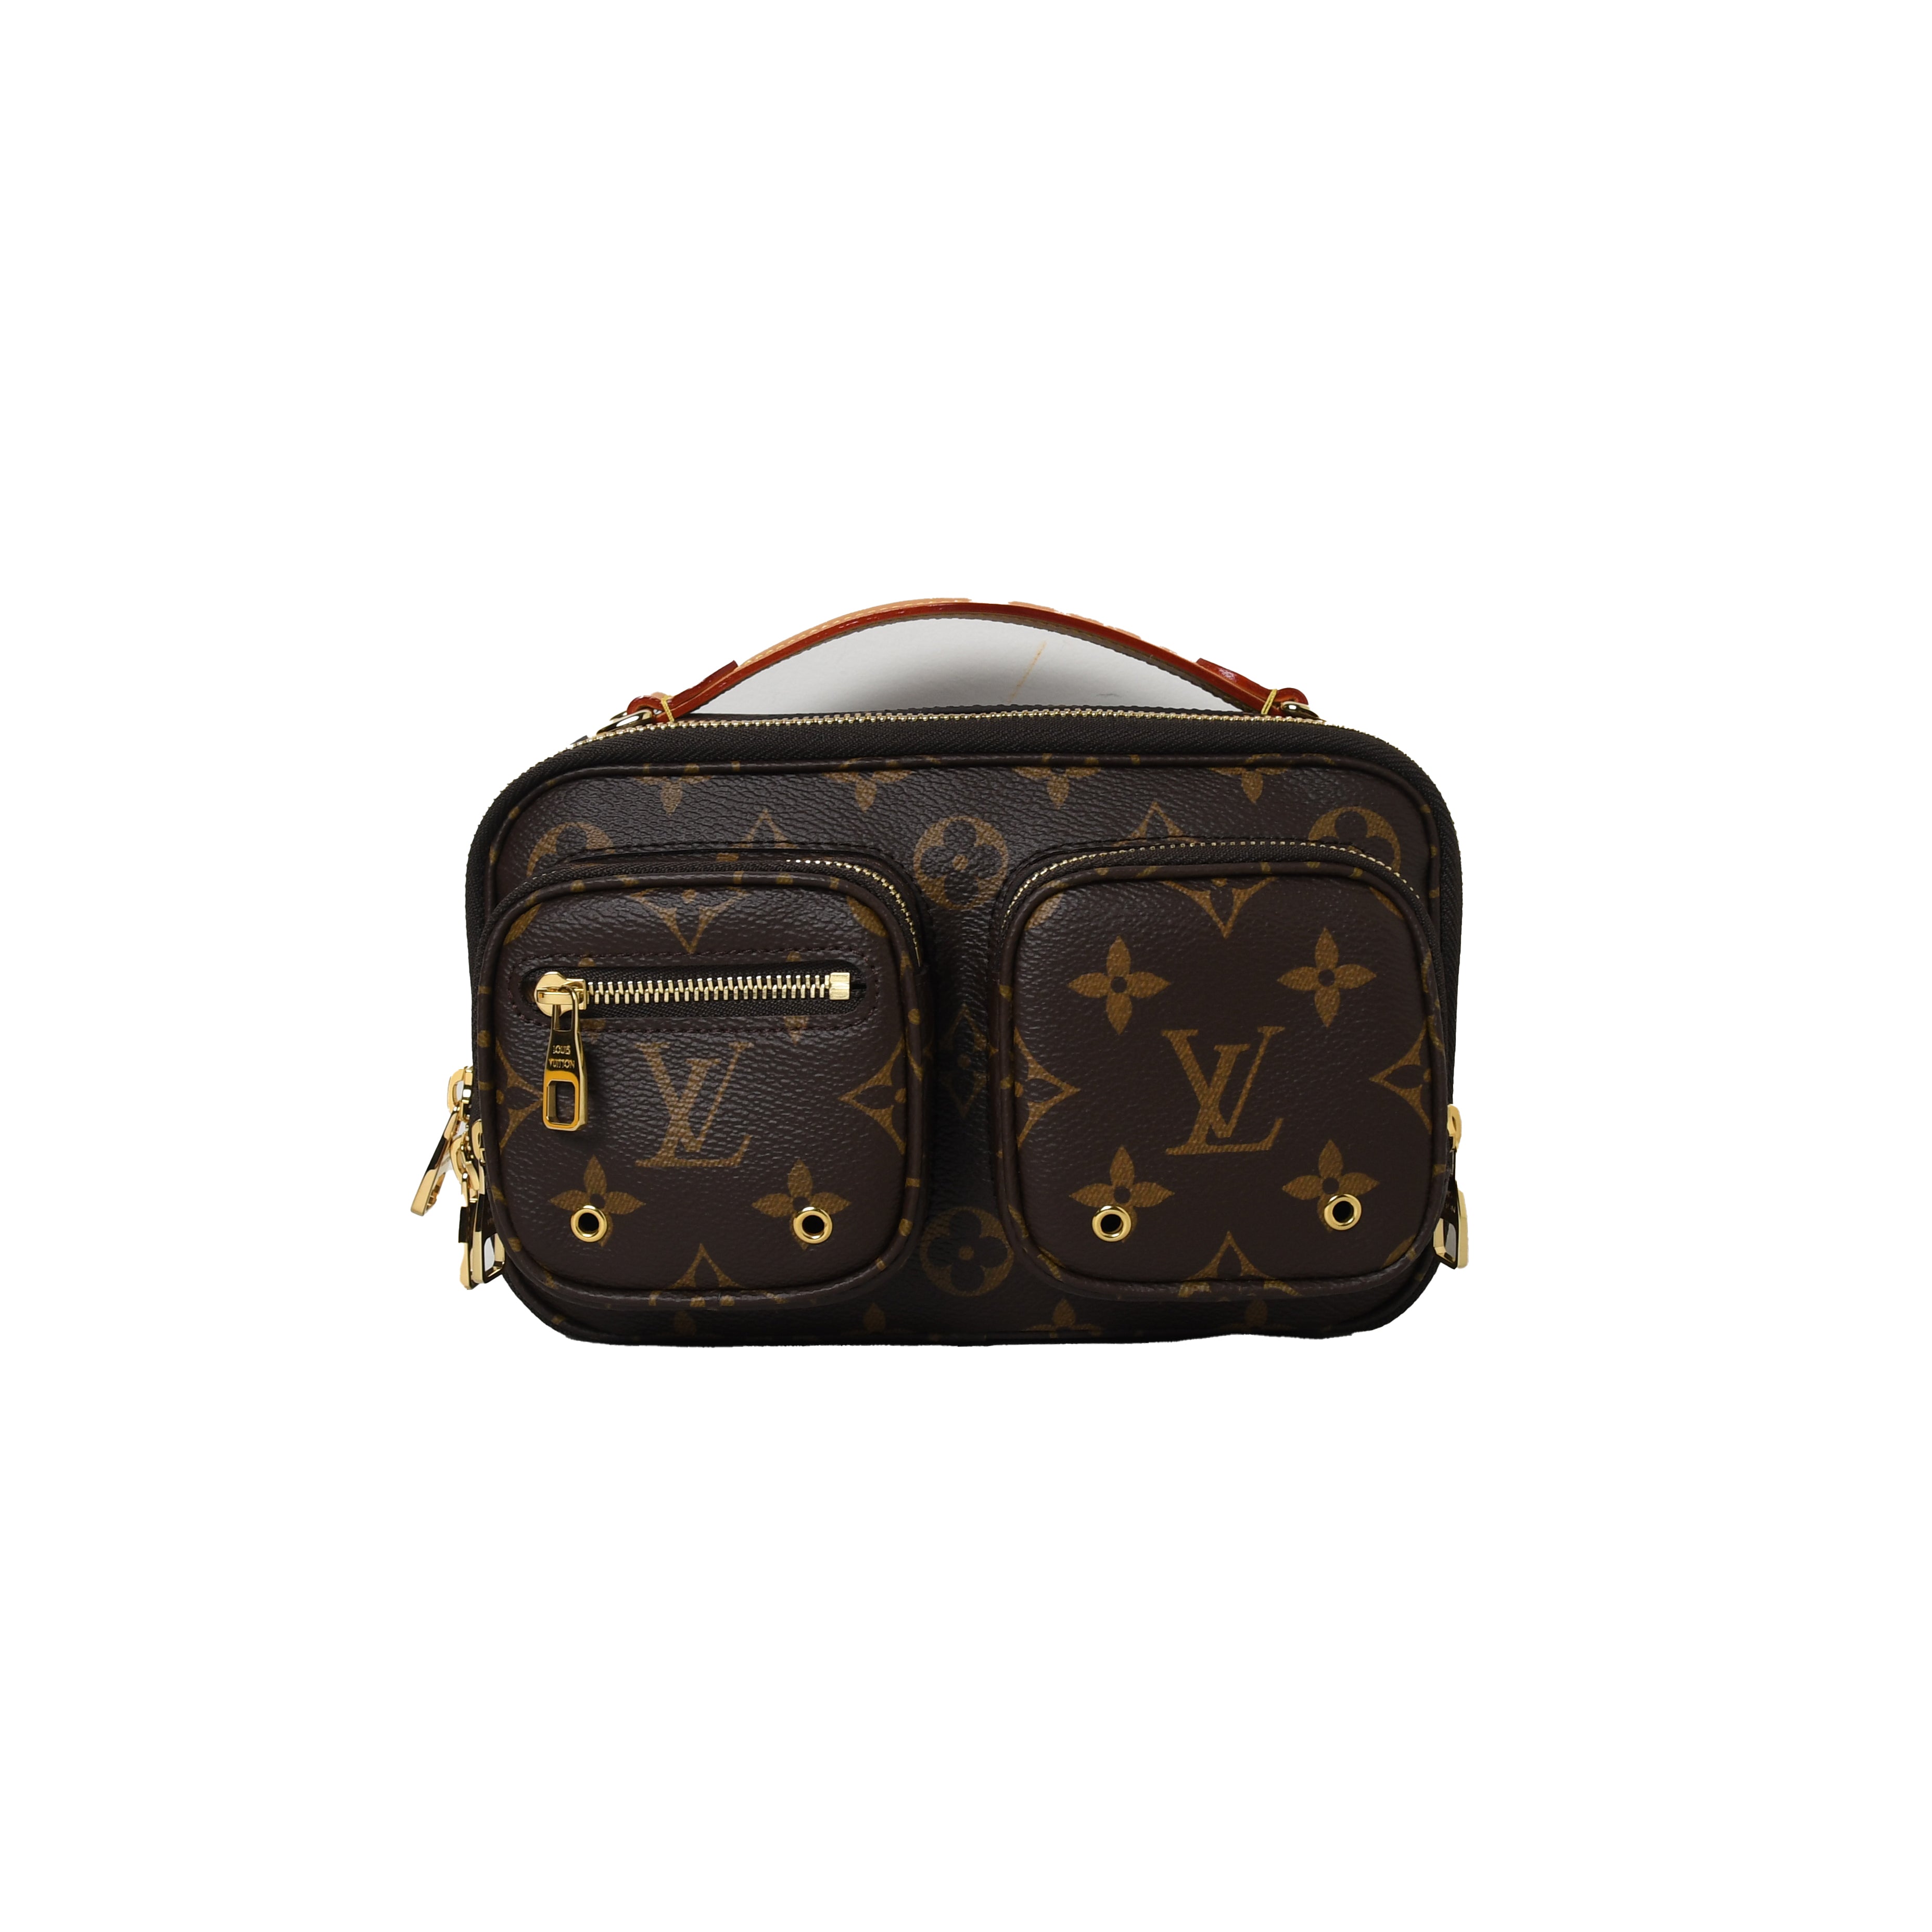 Louis Vuitton - Noé - Monogram - Brown - Women - Handbag - Luxury